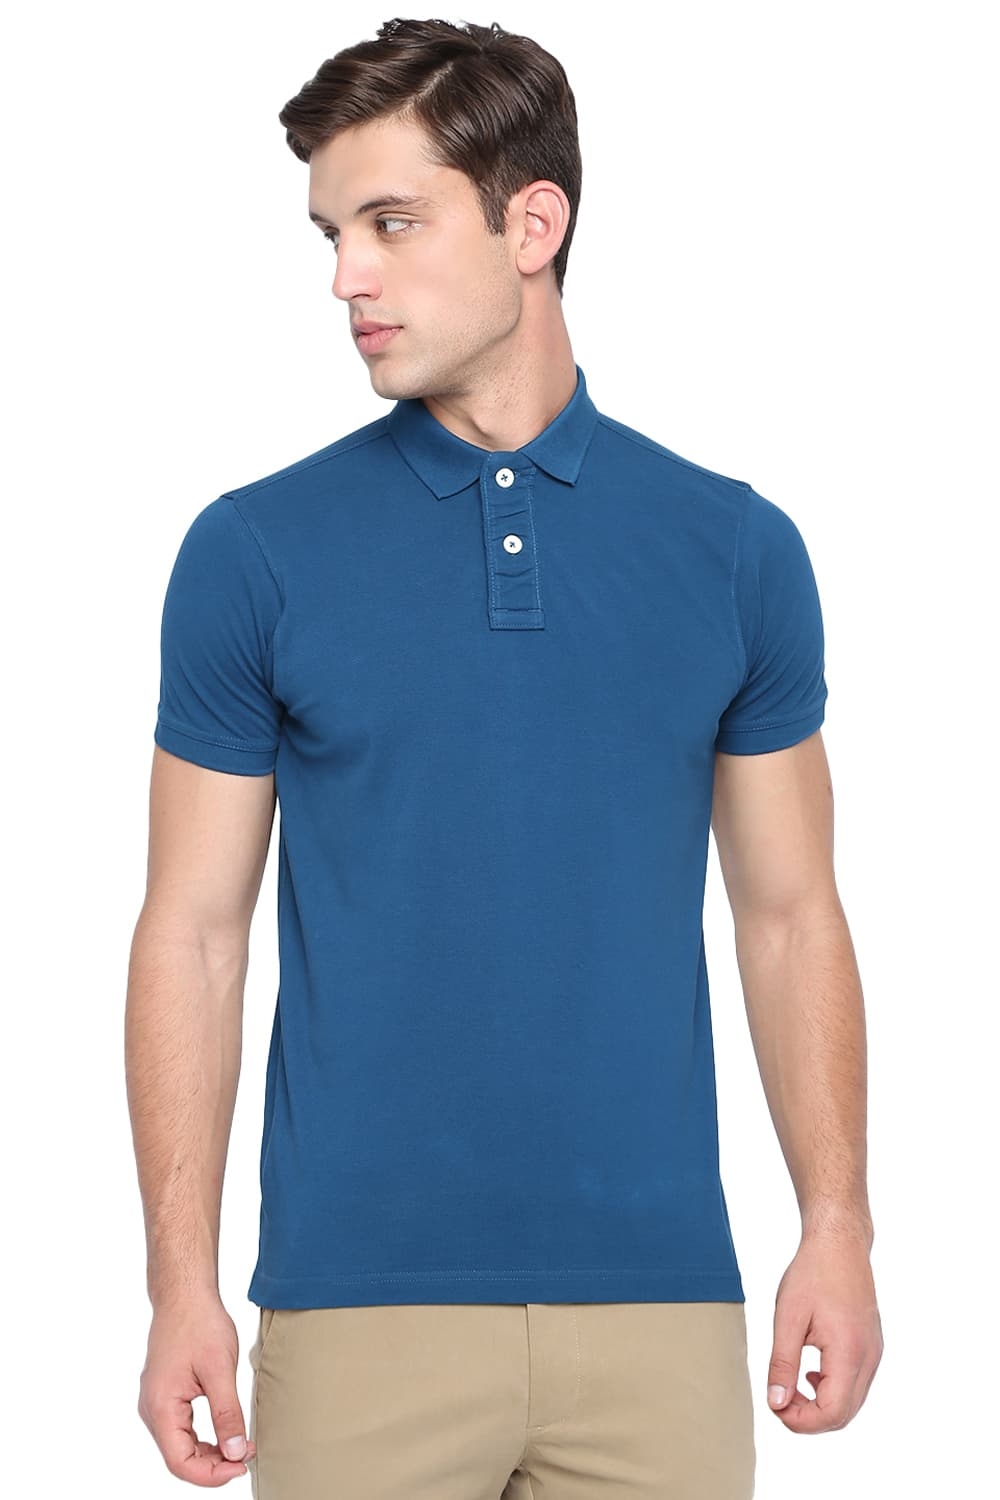 Basics | Basics Muscle Fit Moroccan Blue Polo T Shirt